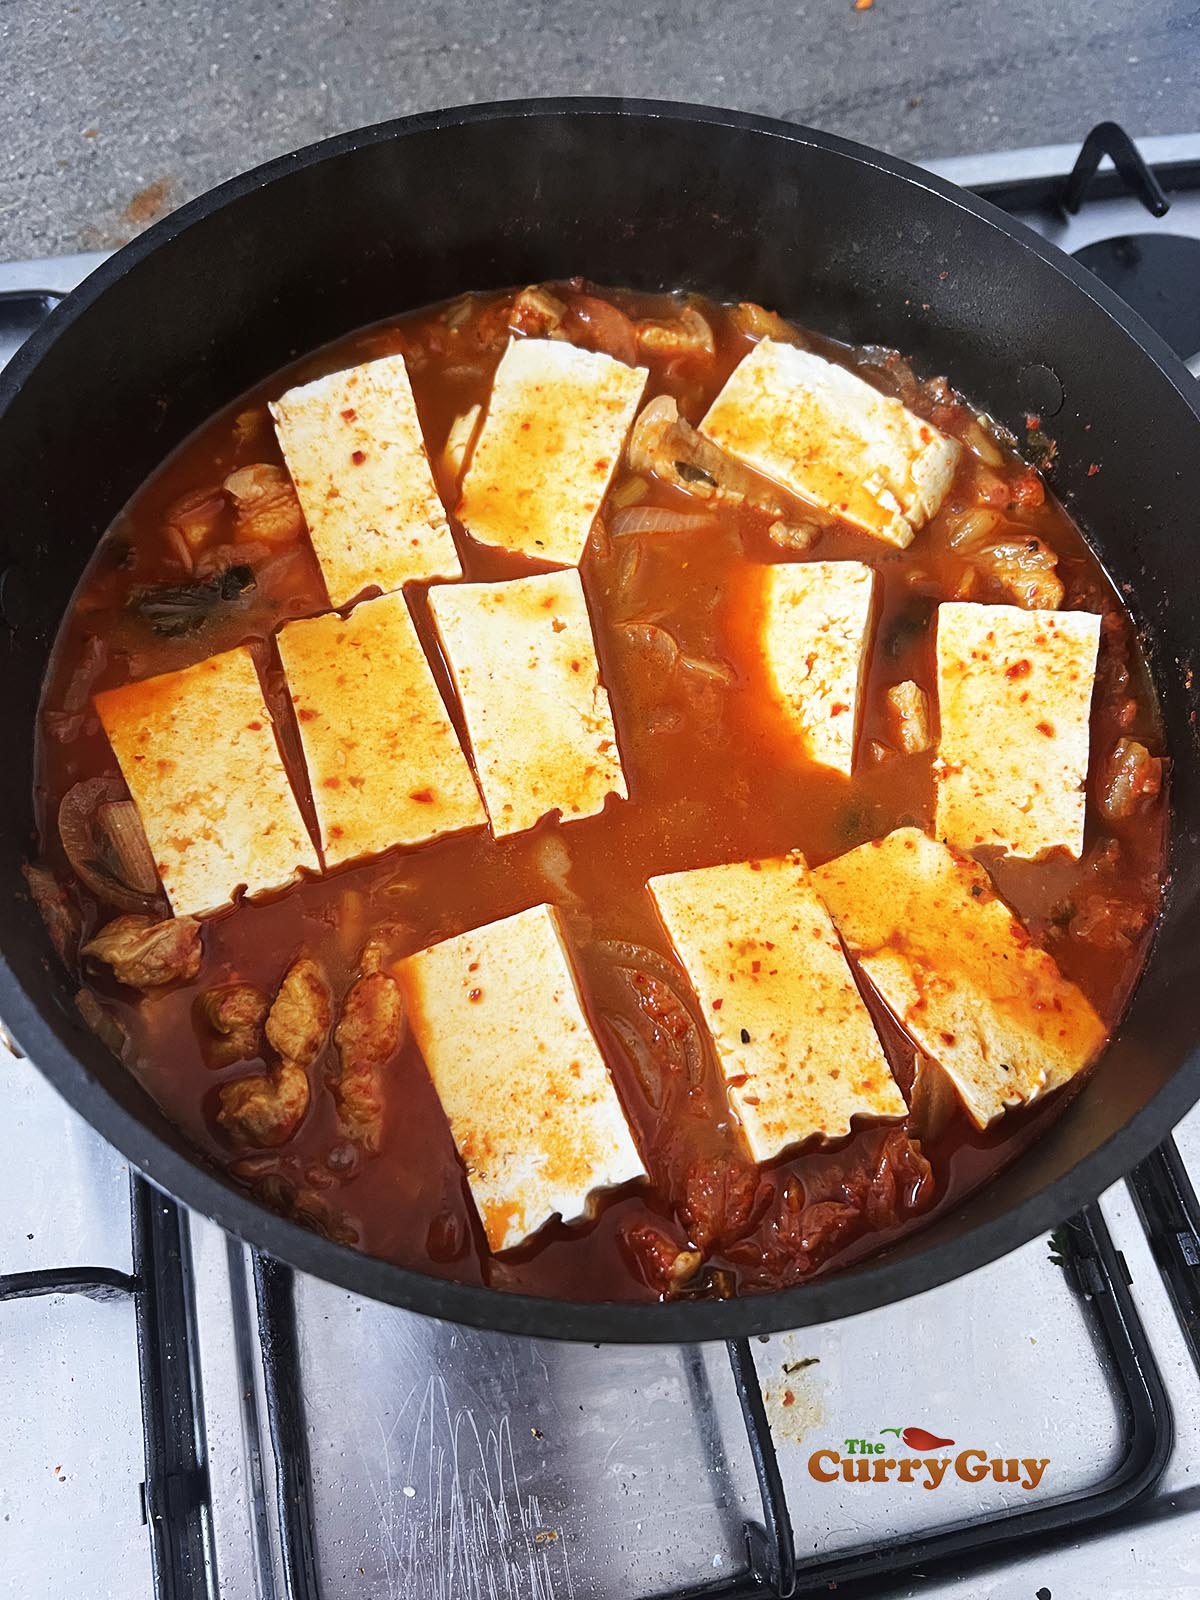 Adding tofu to the pot